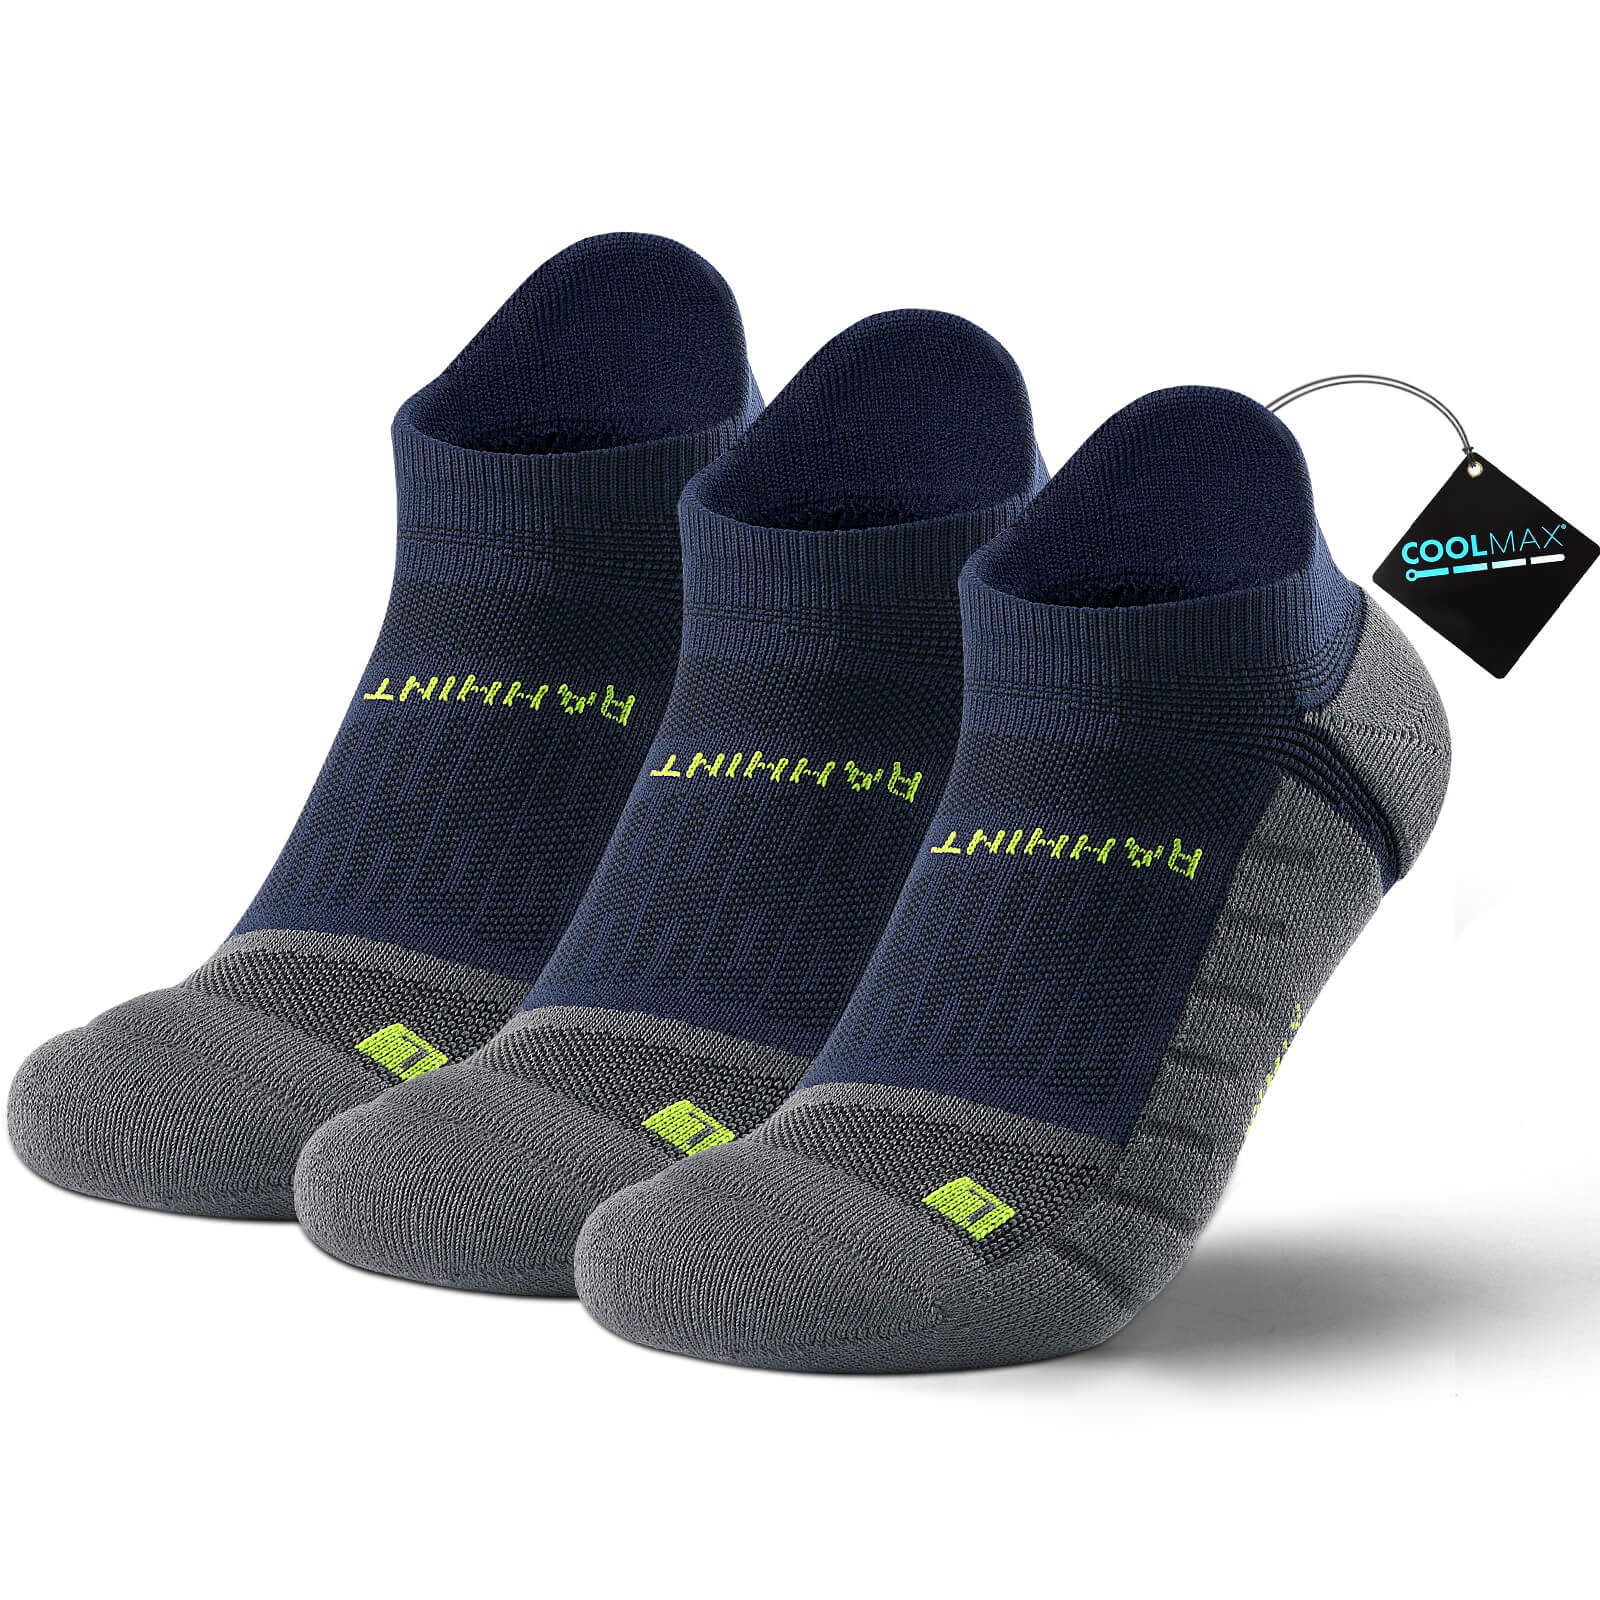 Coolmax Compression Ankle Running Socks